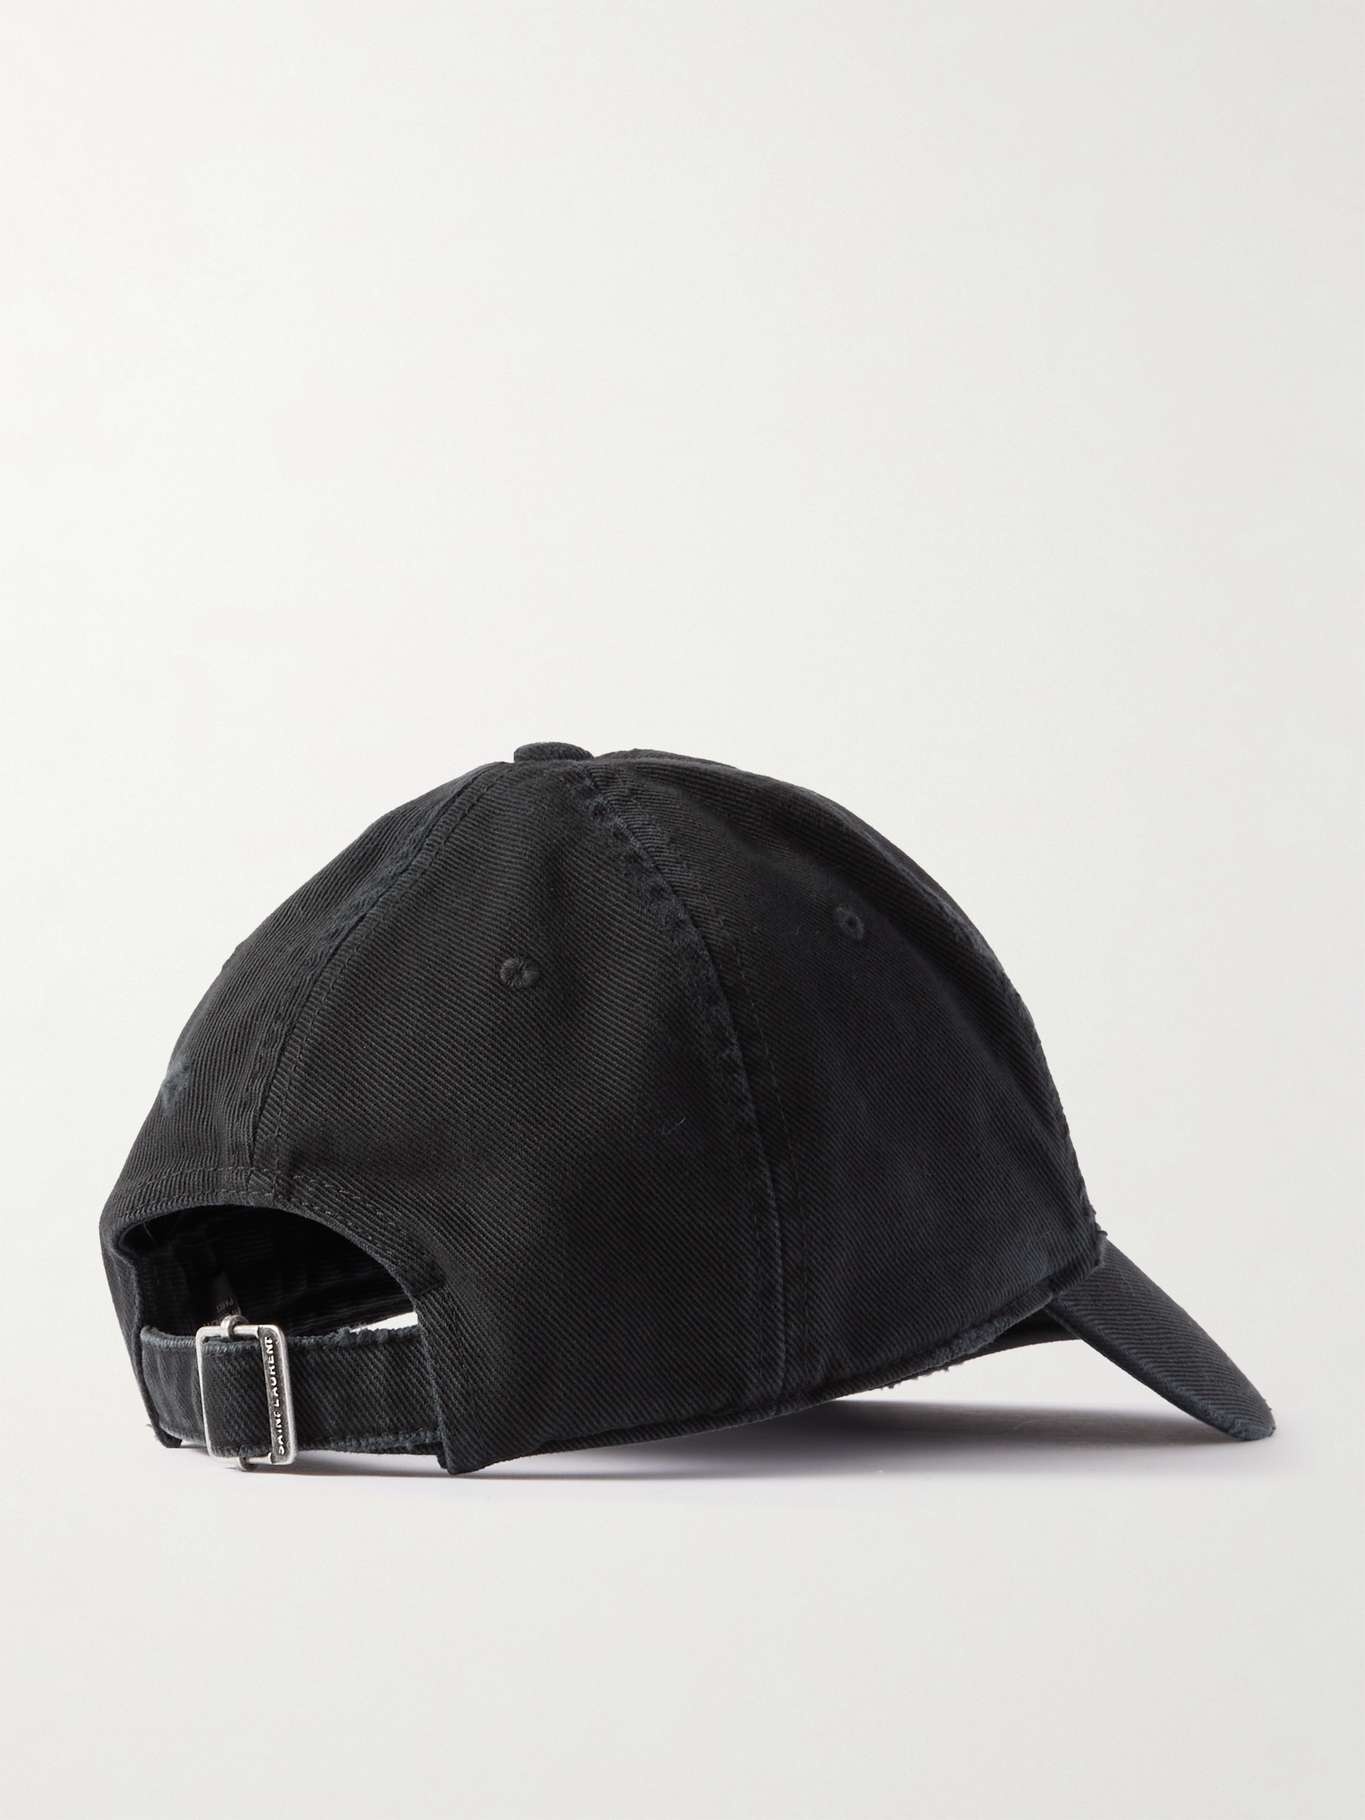 Distressed denim hat - 3